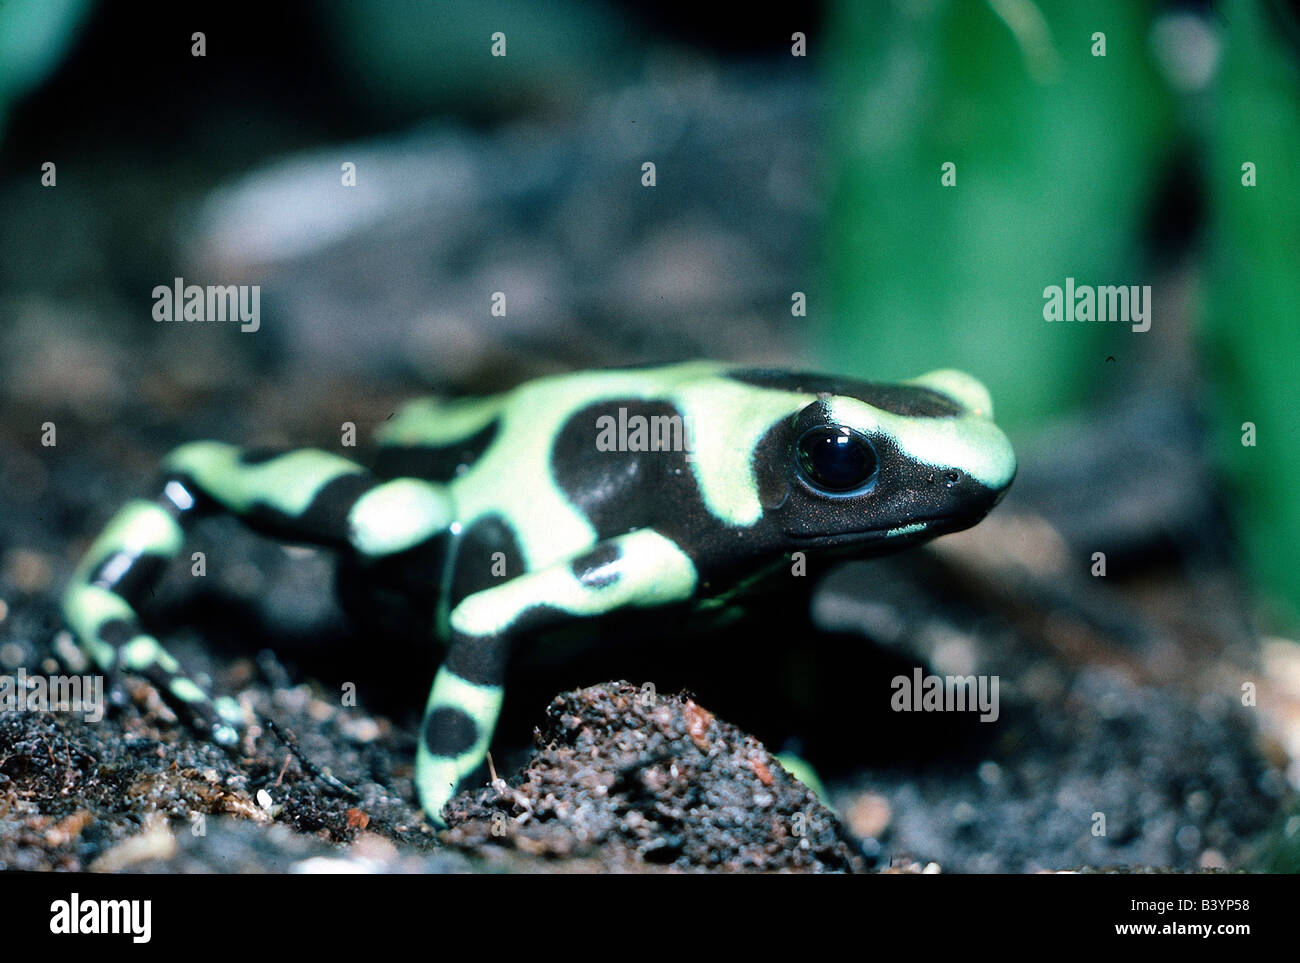 zoology / animals, amphibian, frogs, Green and Black Poison Dart Frog, (Dendrobates auratus), sitting on ground, distribution: C Stock Photo